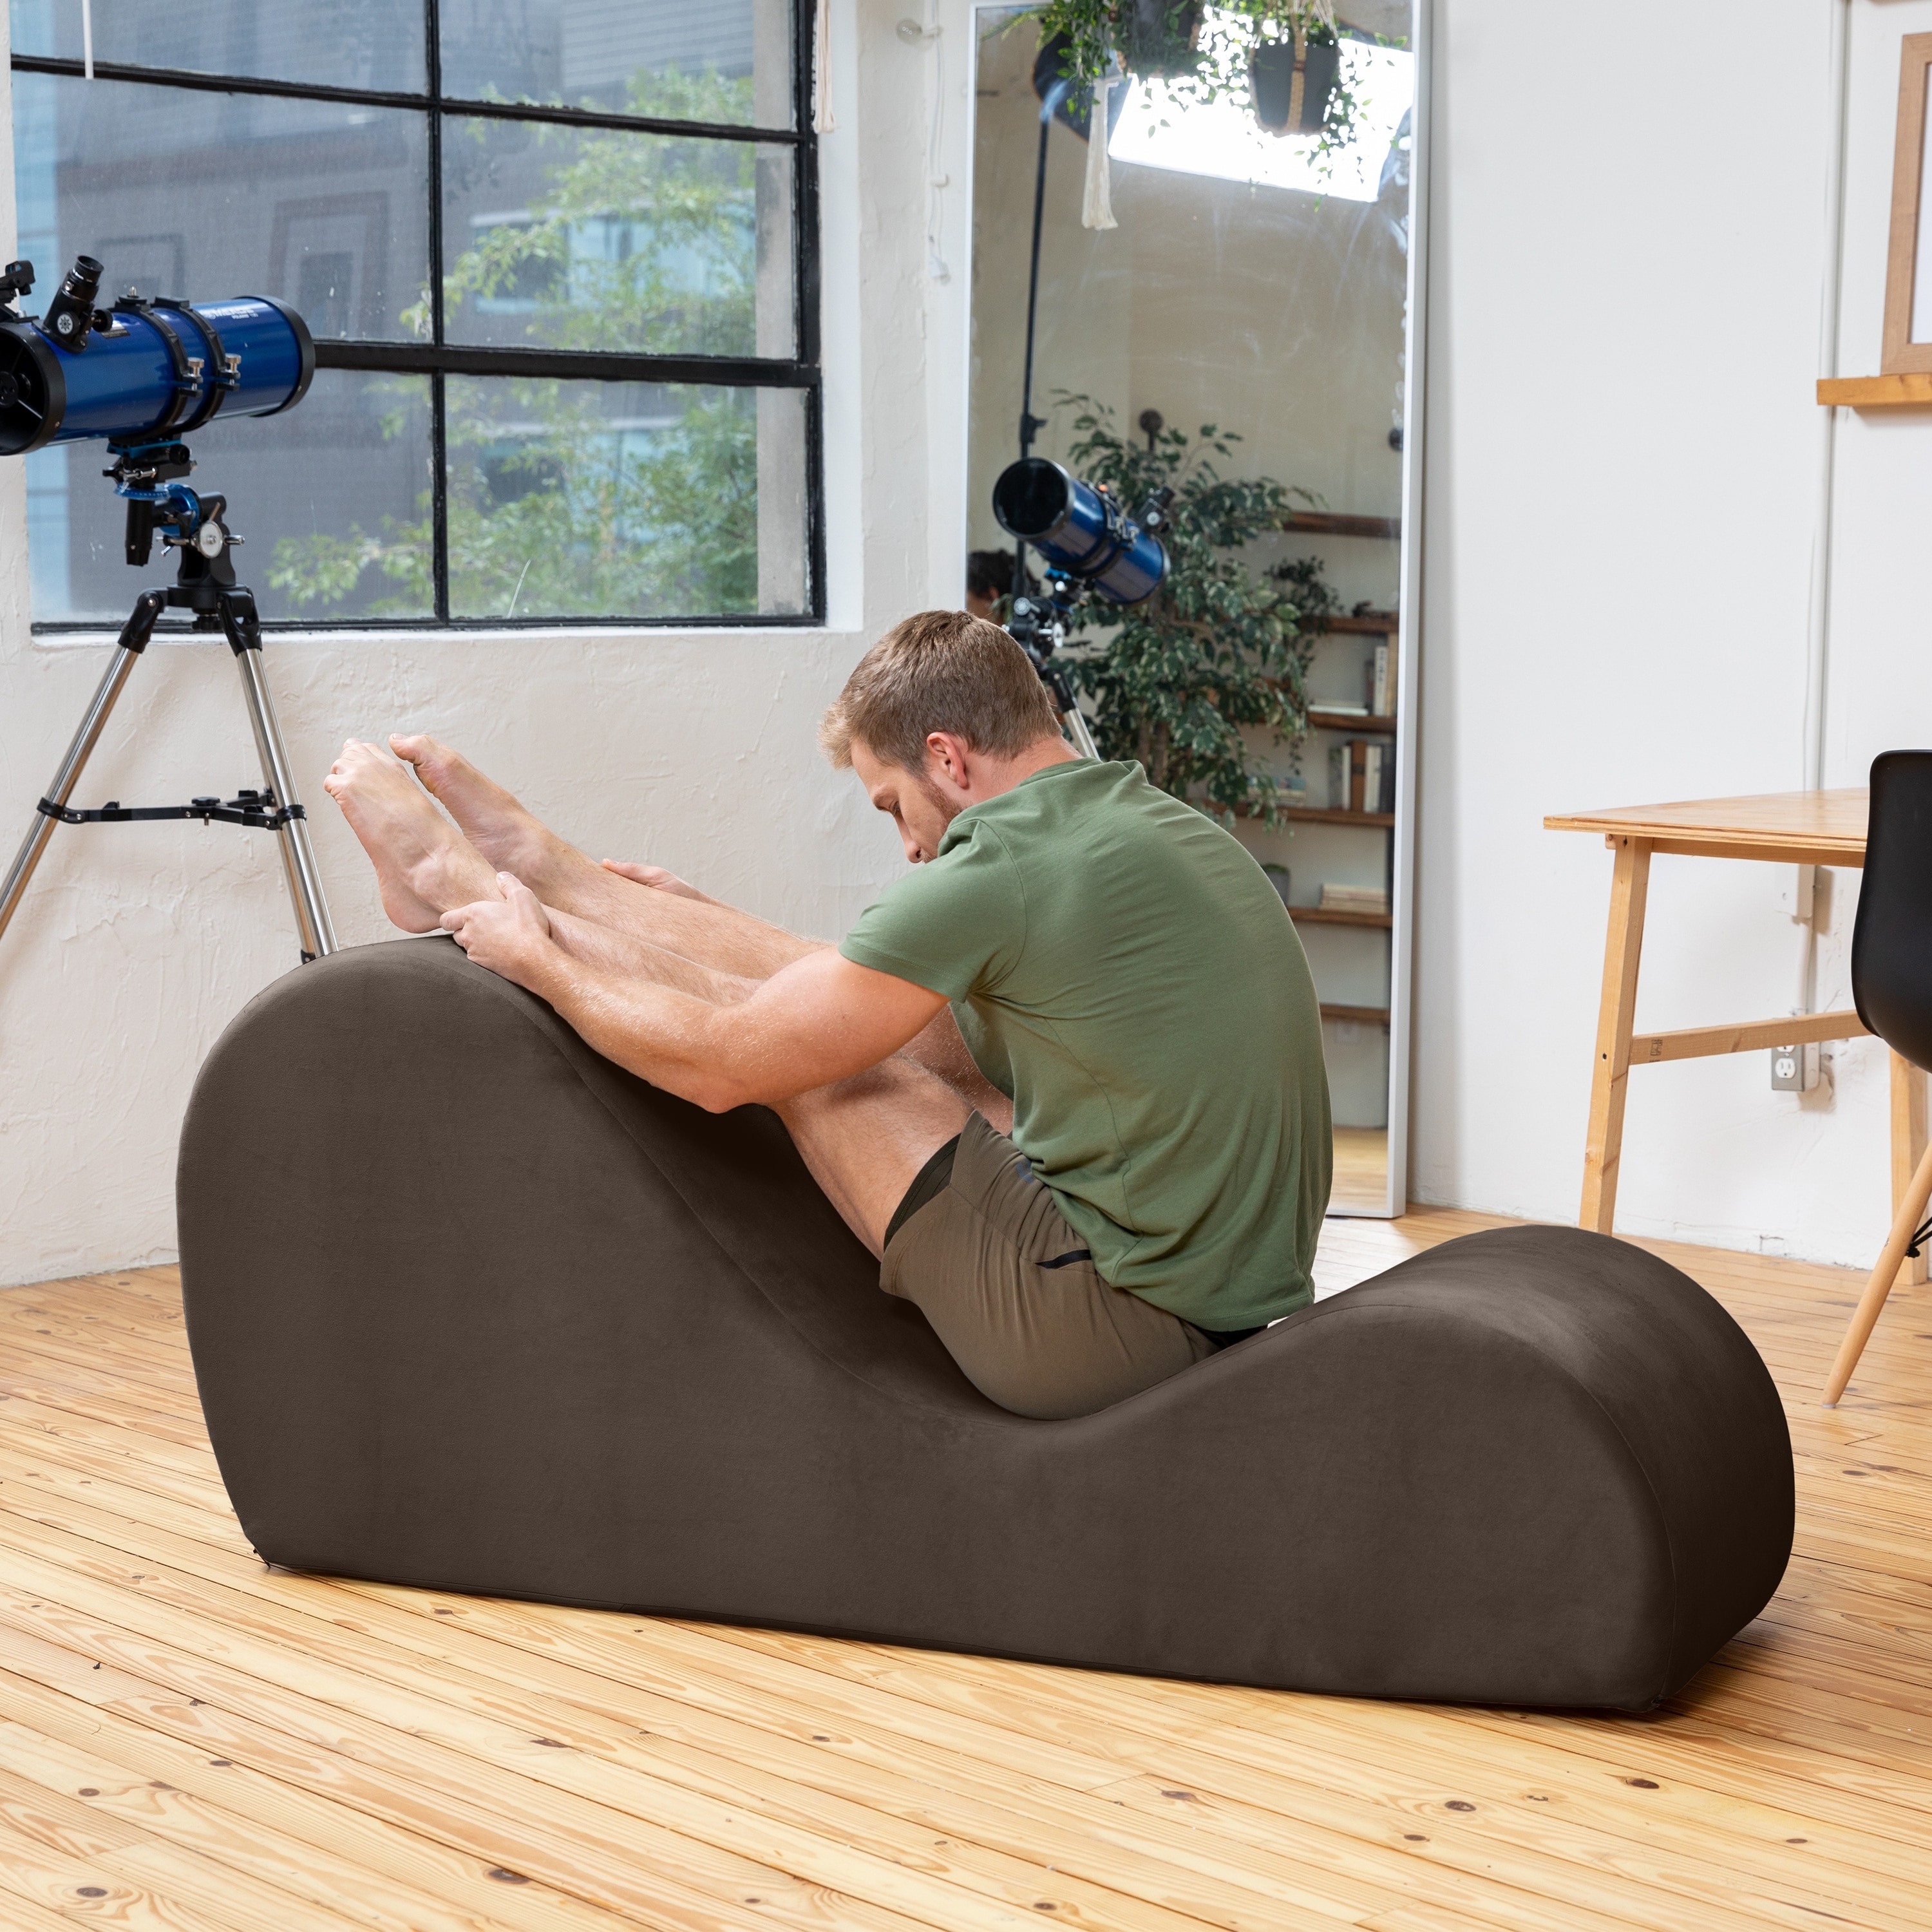 Avana Yoga Chaise Lounge Chair - On Sale - Bed Bath & Beyond